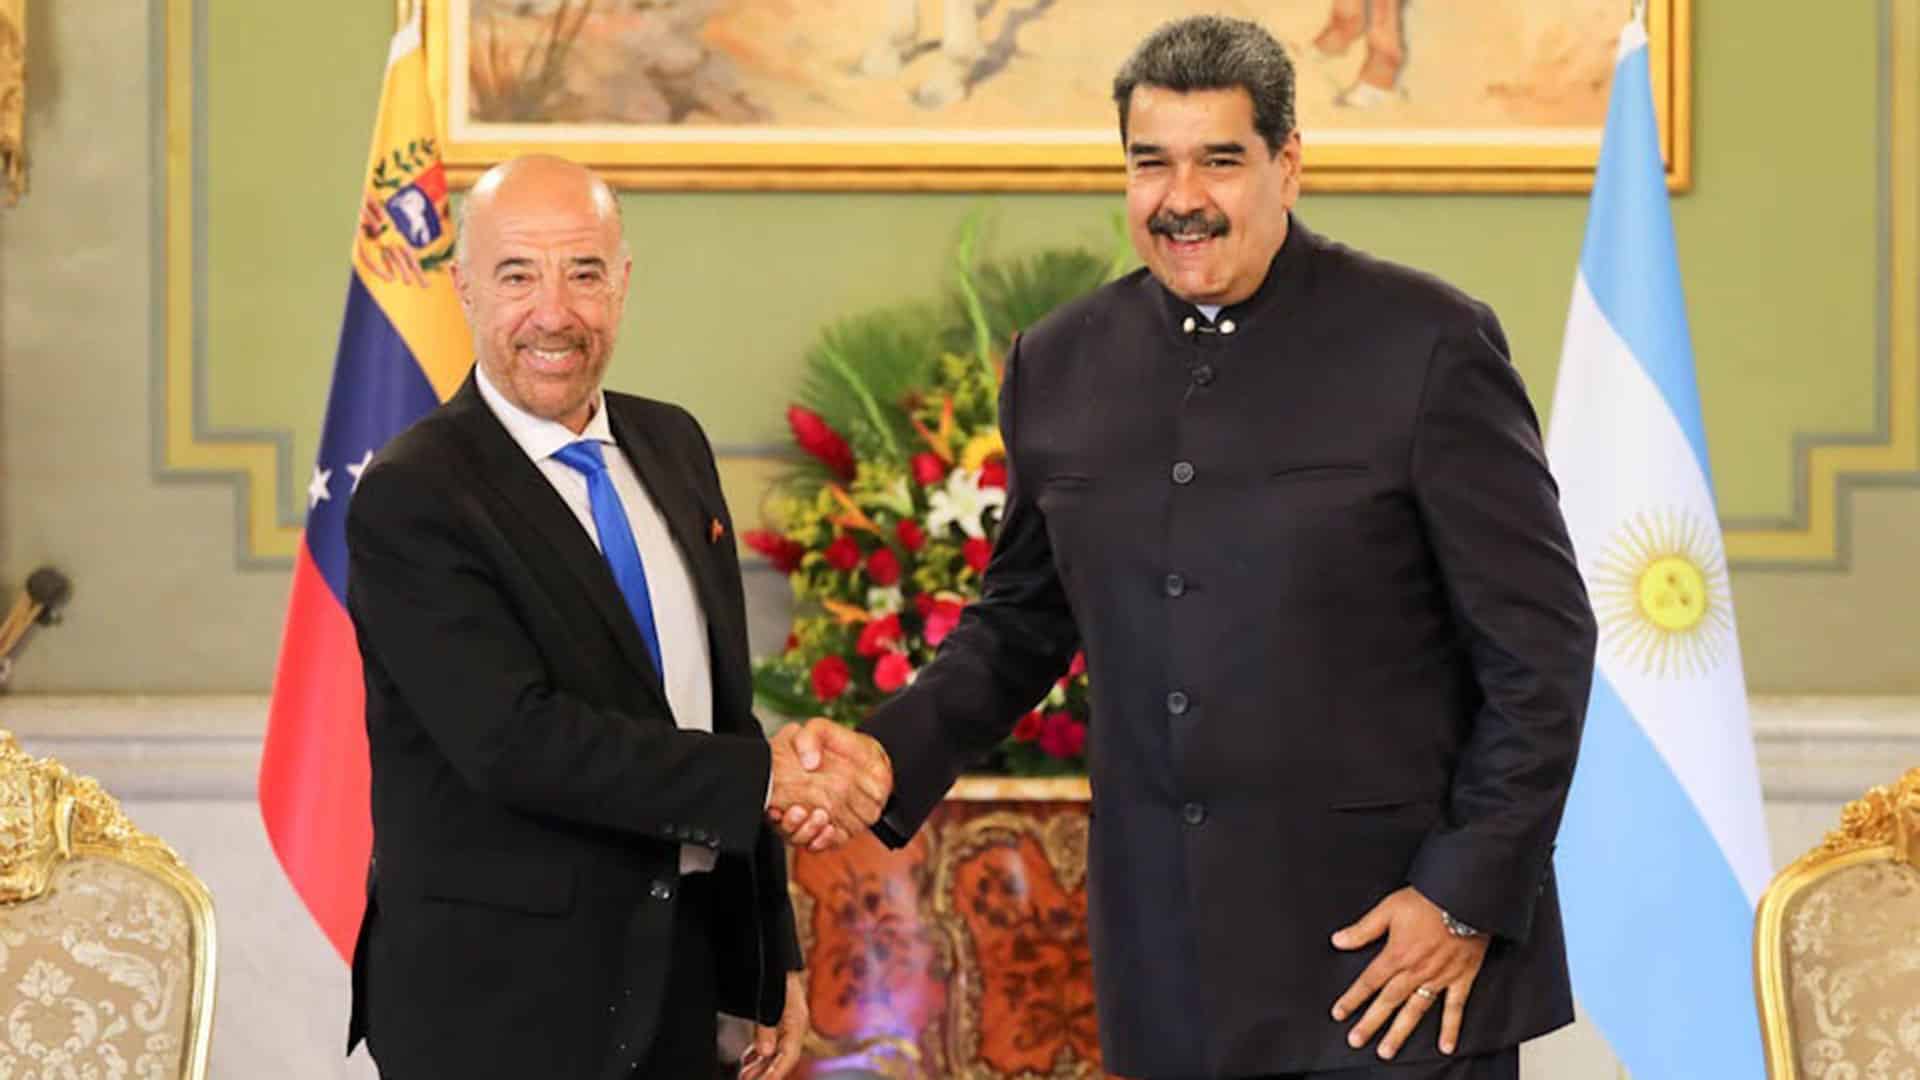 Un discurso radical marcó la llegada del nuevo embajador kirchnerista a Venezuela